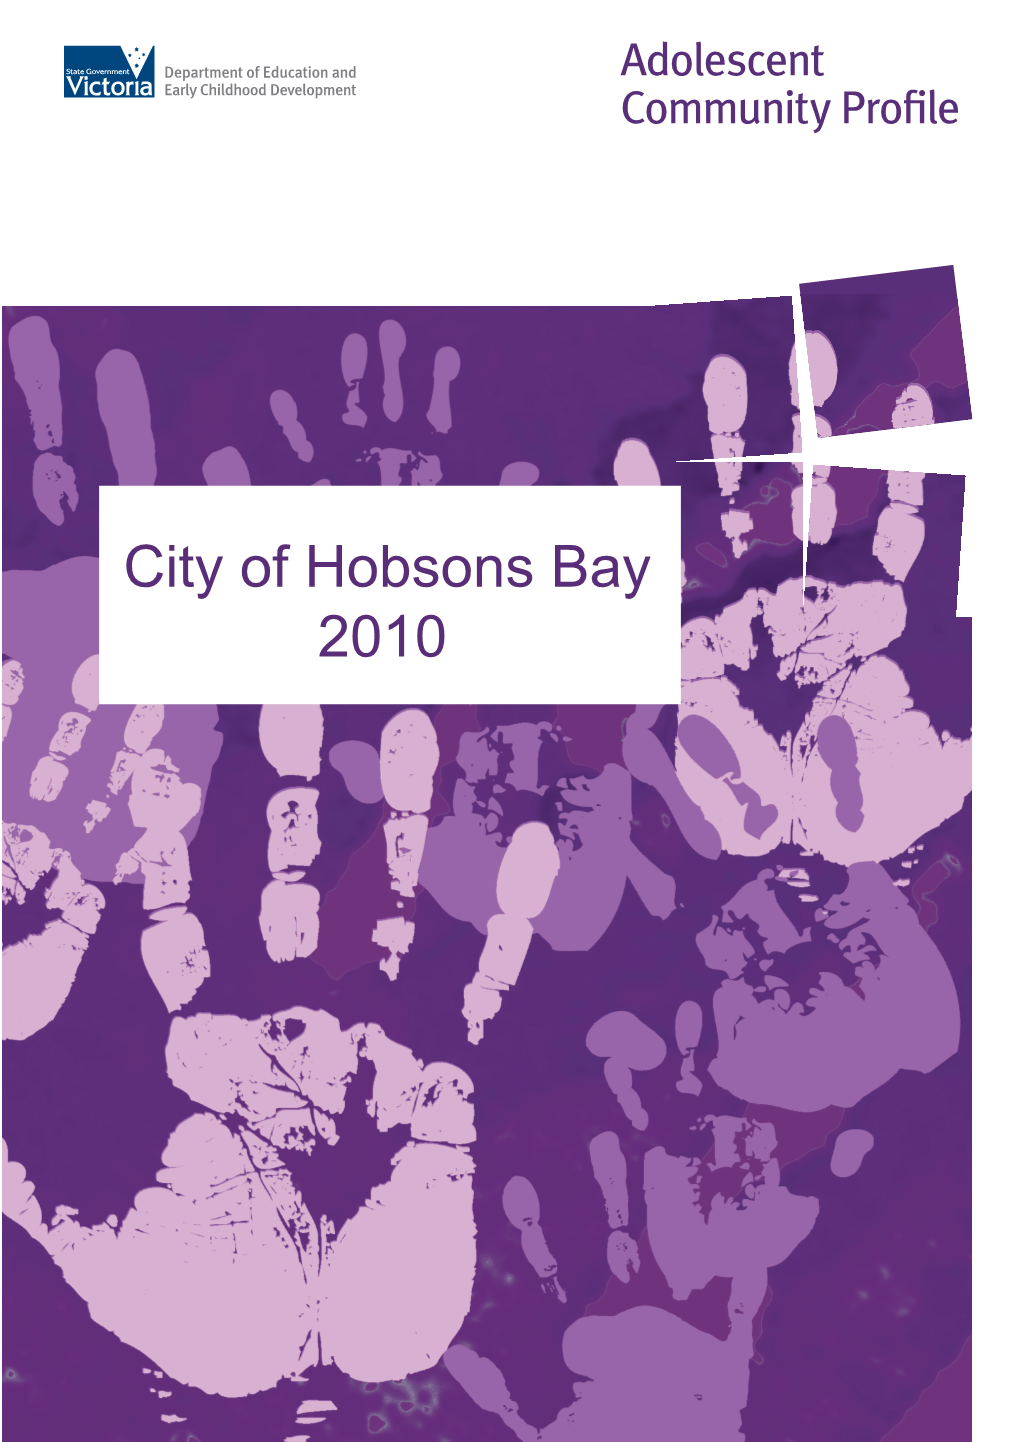 City of Hobsons Bay 2010 Eee Adolescent Community Profiles I